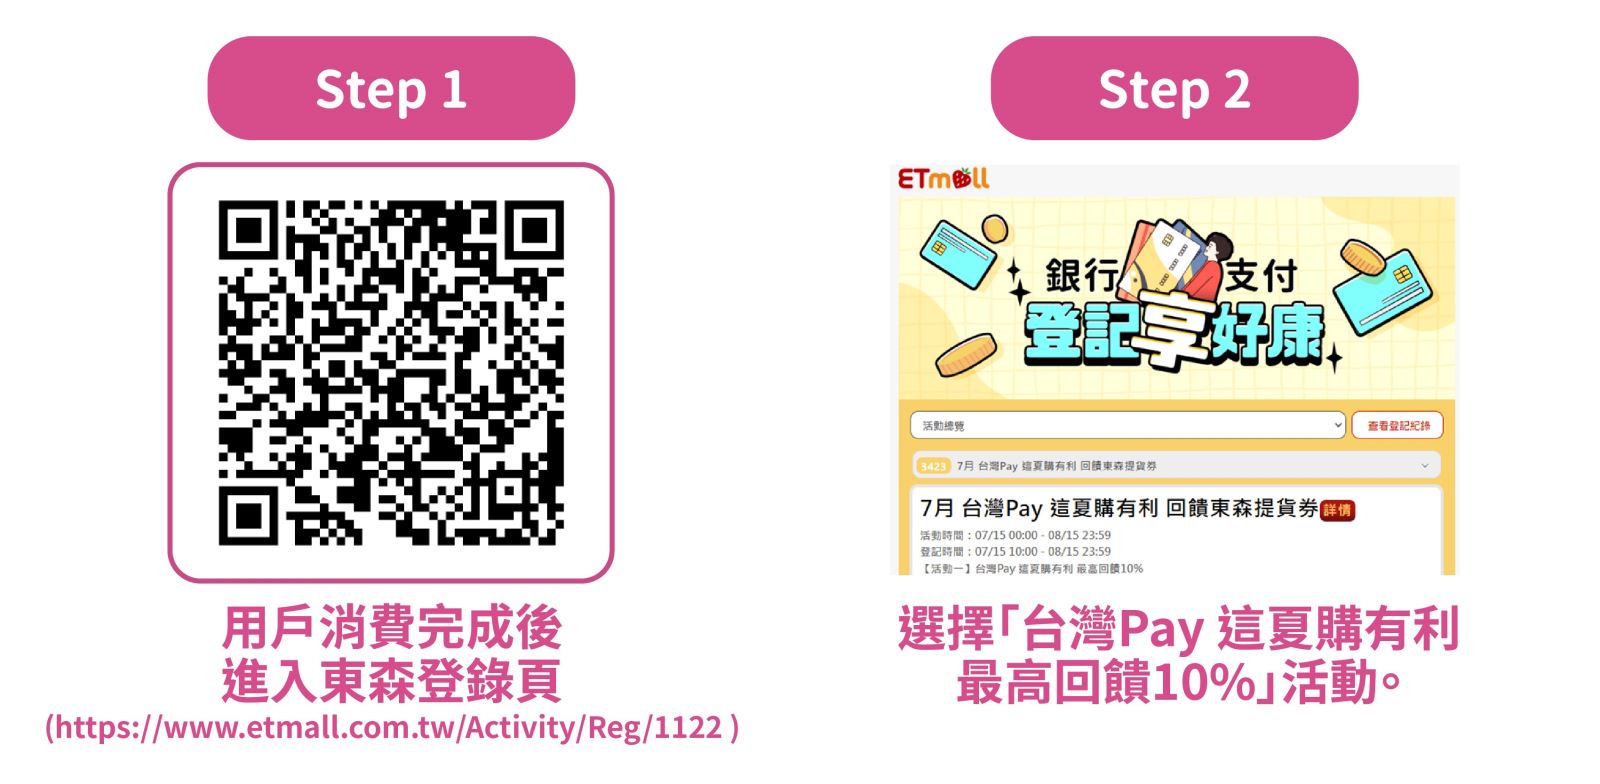 step1.用戶消費完成後進入東森登錄頁；step2.選擇台灣Pay這夏購有利最高回饋10%活動